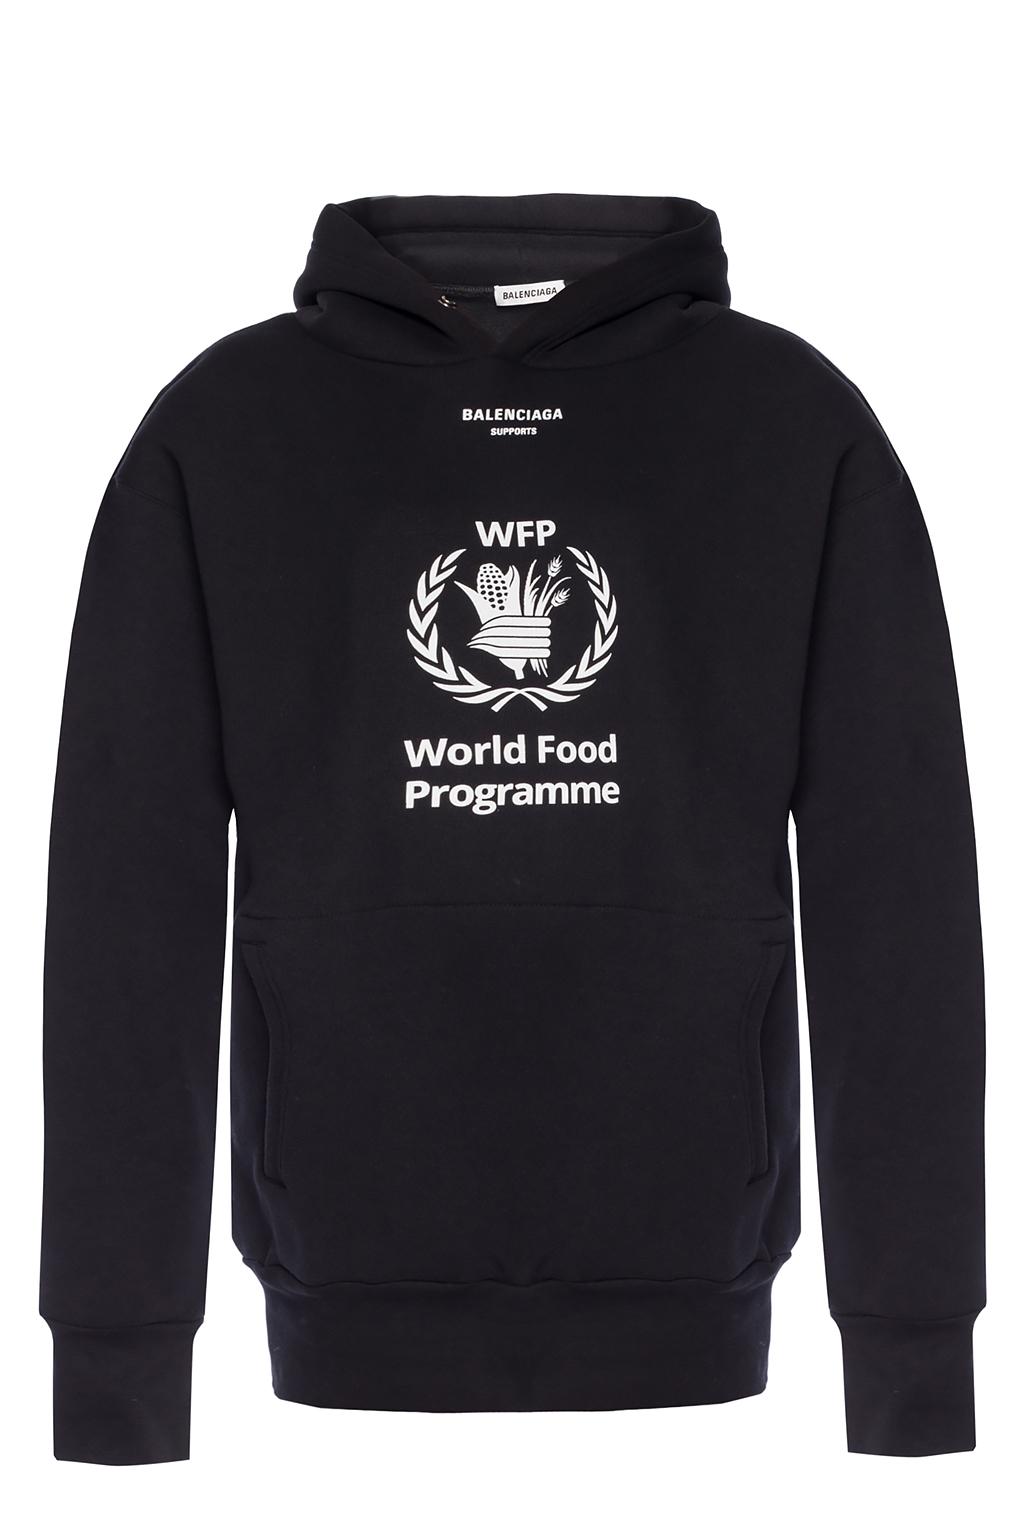 World Food Programme' printed 